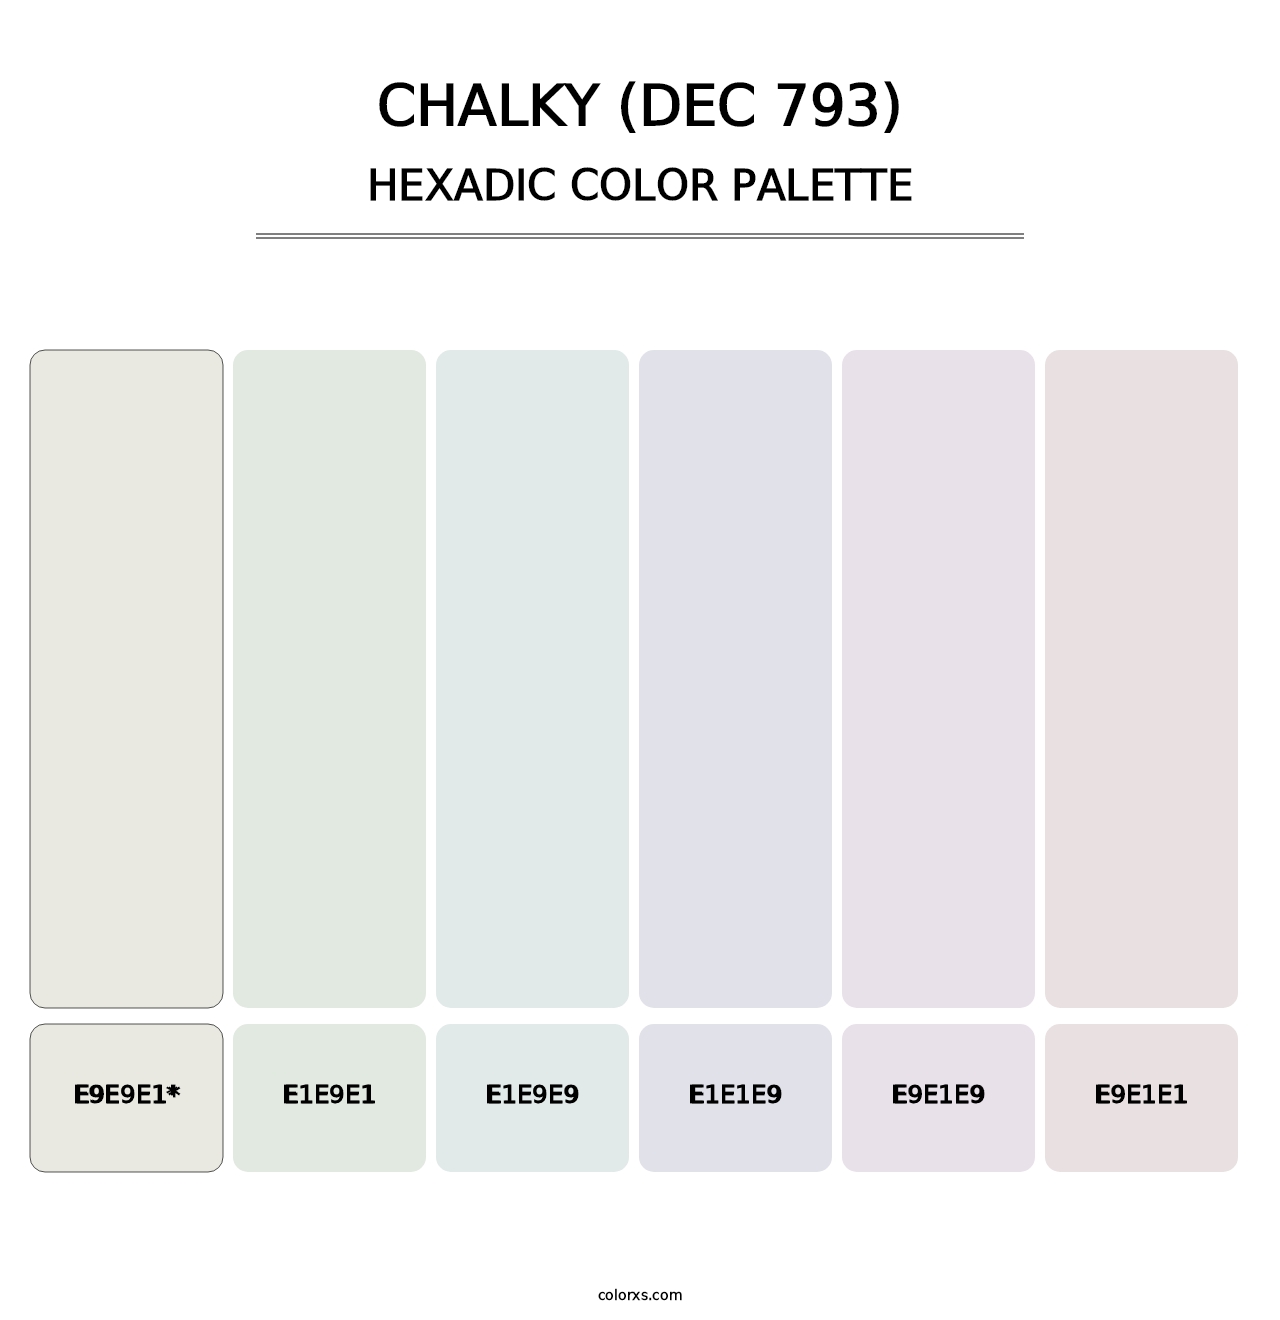 Chalky (DEC 793) - Hexadic Color Palette